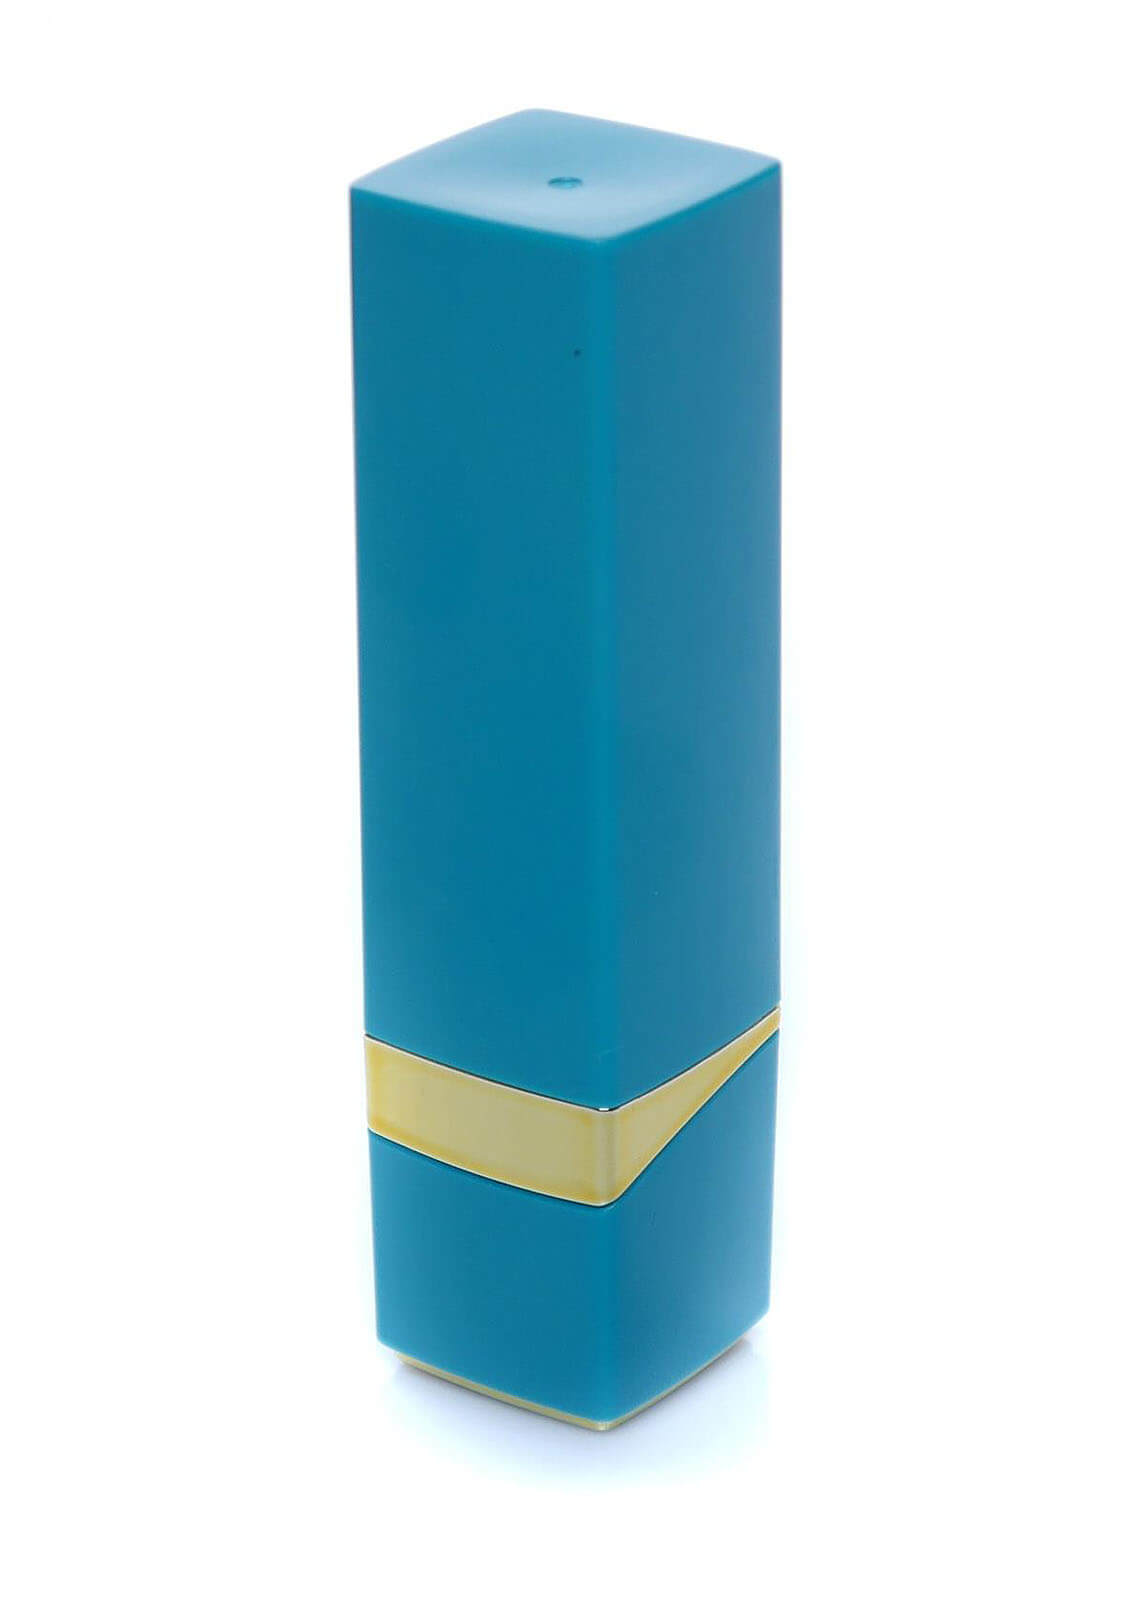 Boss Series Lipstick Vibrator (Blue)